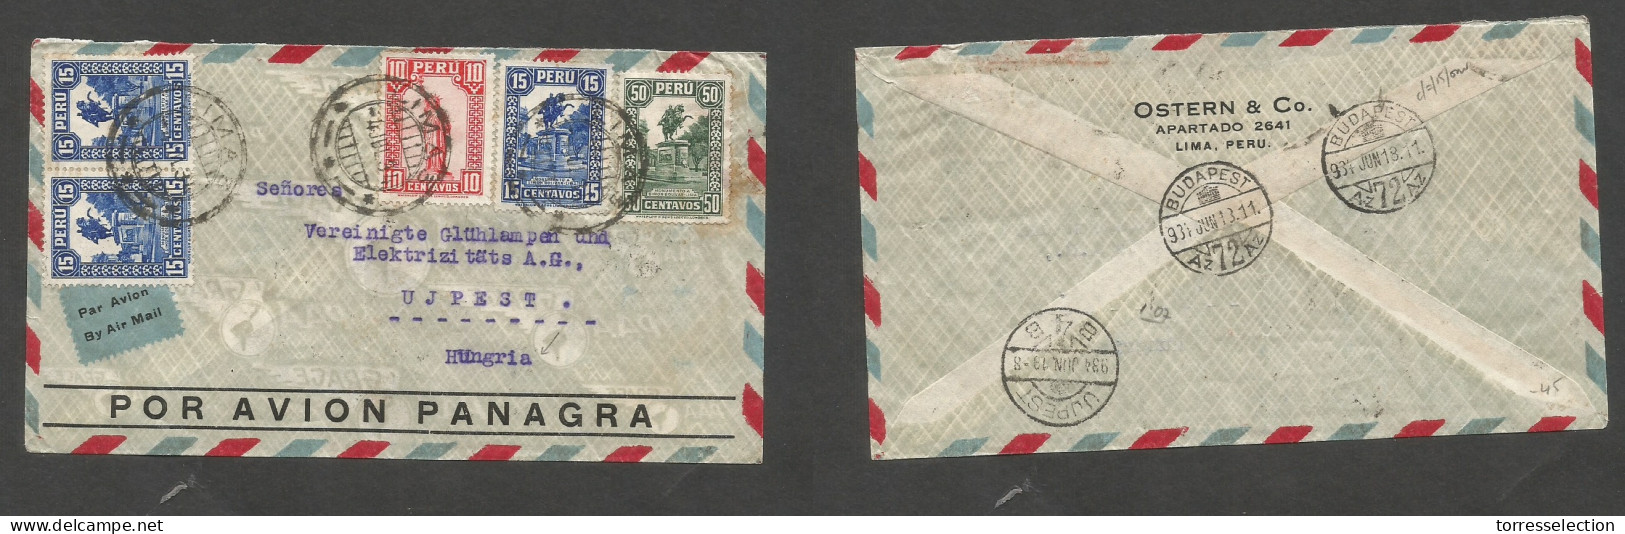 PERU. 1934 (4 June) Lima - Hungary, Ujpest (13 June) Air Multifkd Env, At 1,05 Ps Rate. VF + Air Label. SALE. - Pérou